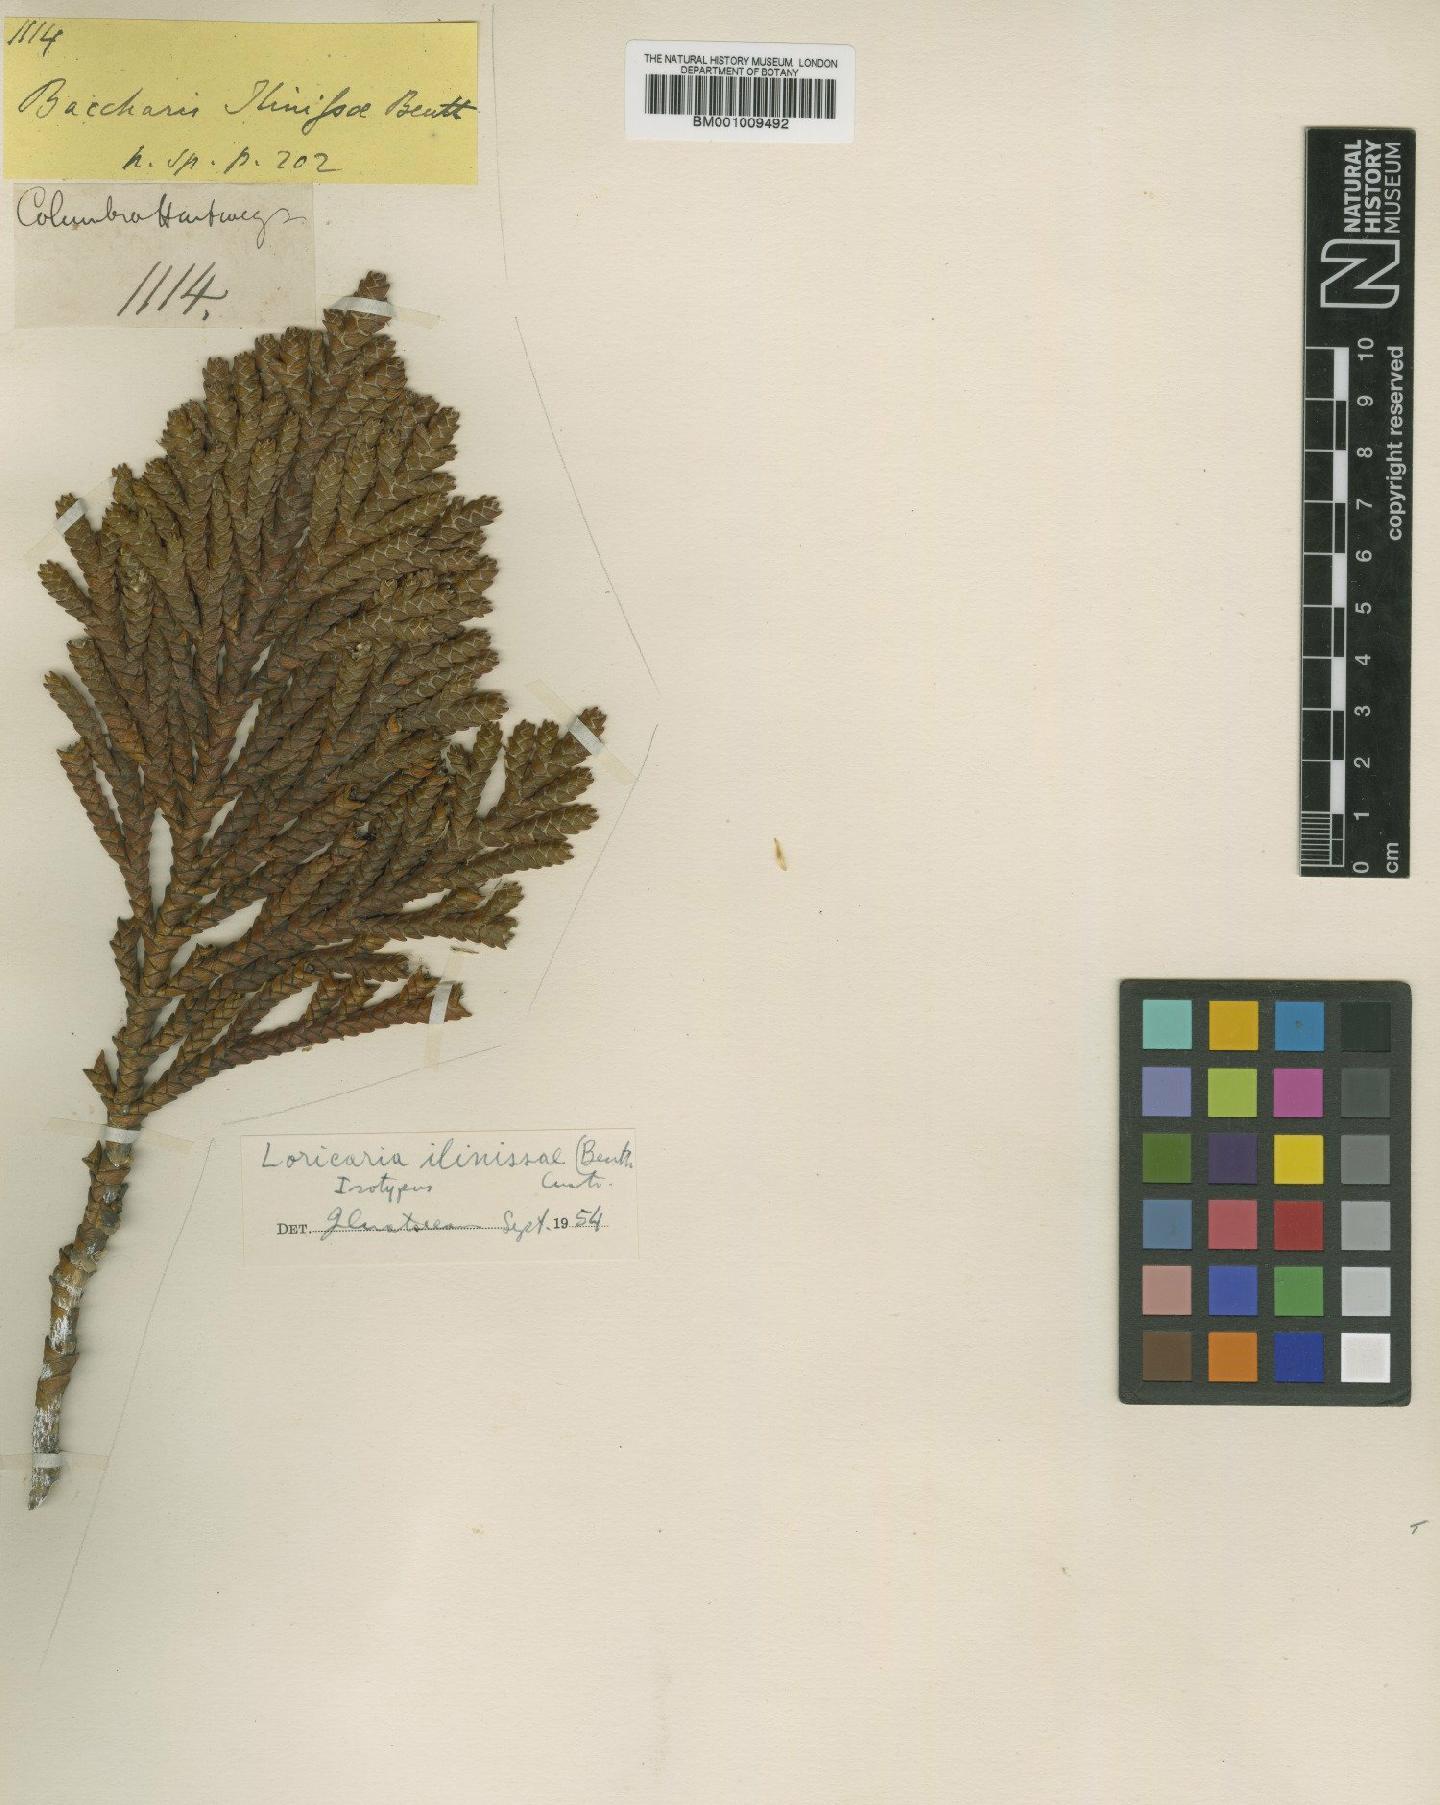 To NHMUK collection (Loricaria ilinissae (Benth.) Cuatrec.; Isotype; NHMUK:ecatalogue:611359)